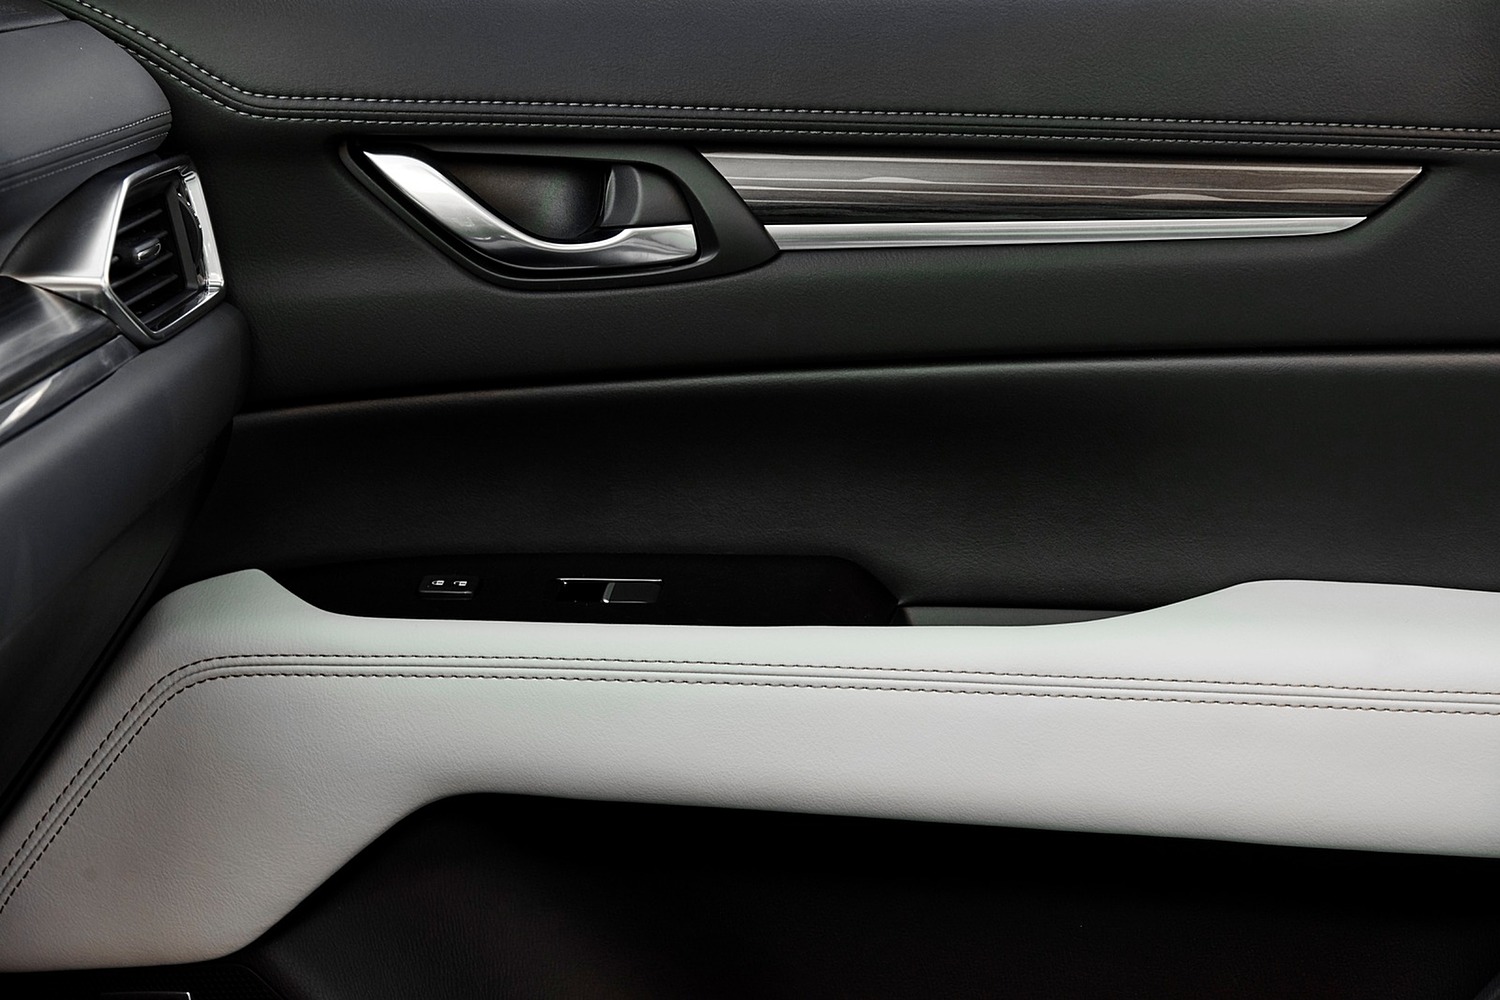 Mazda CX-5 Grand Touring 4dr SUV Interior Detail (2017 model year shown)